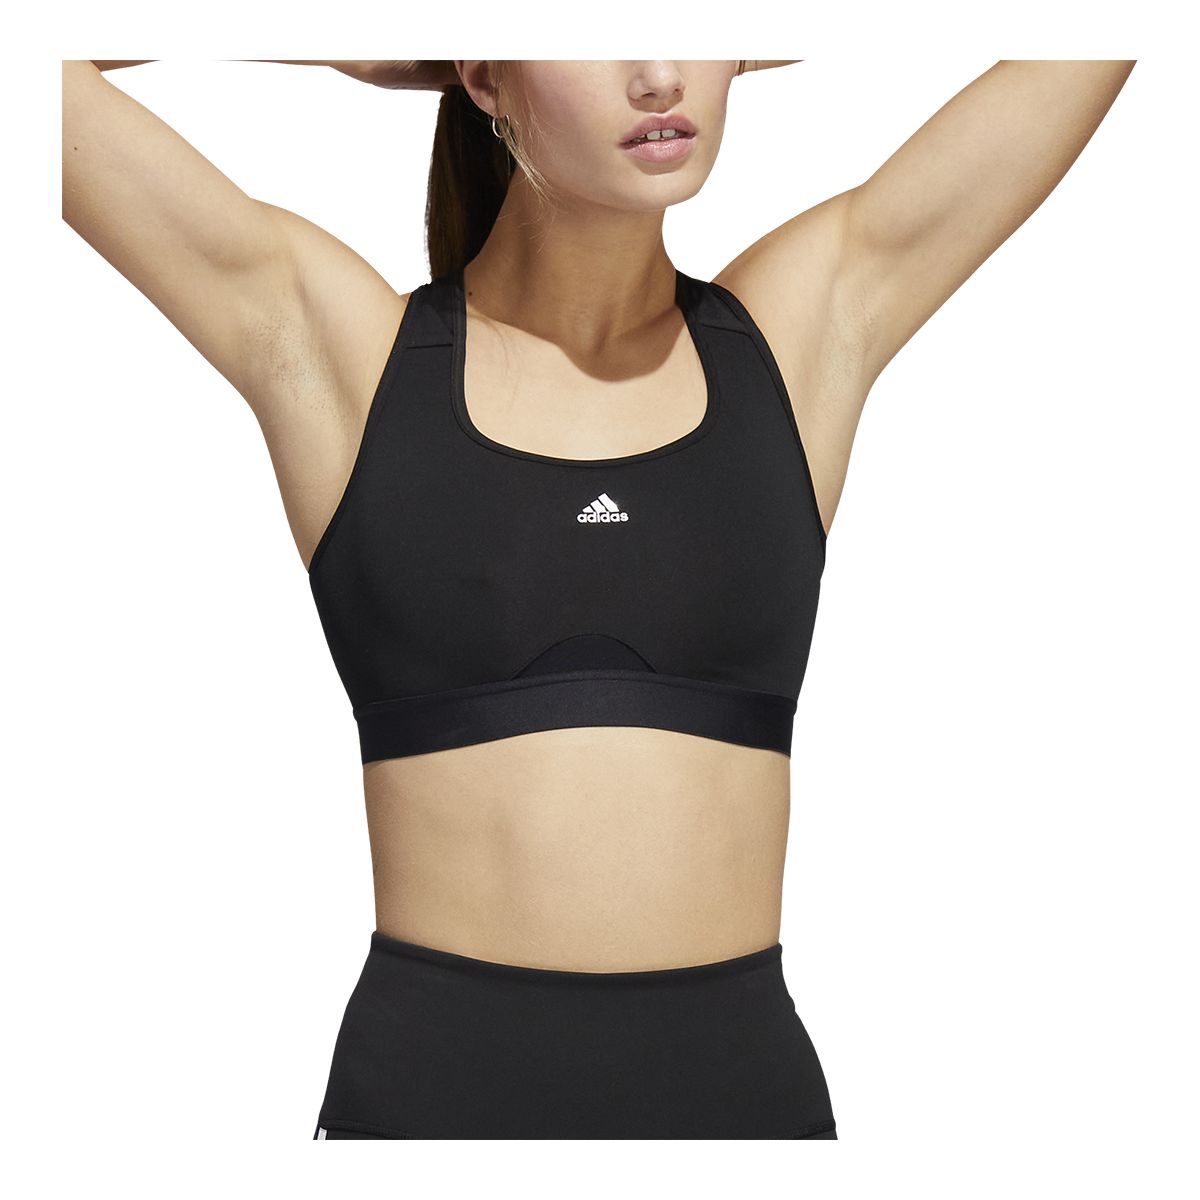 Buy Adidas women plus size sleeveless training sports bra wonoxi Online